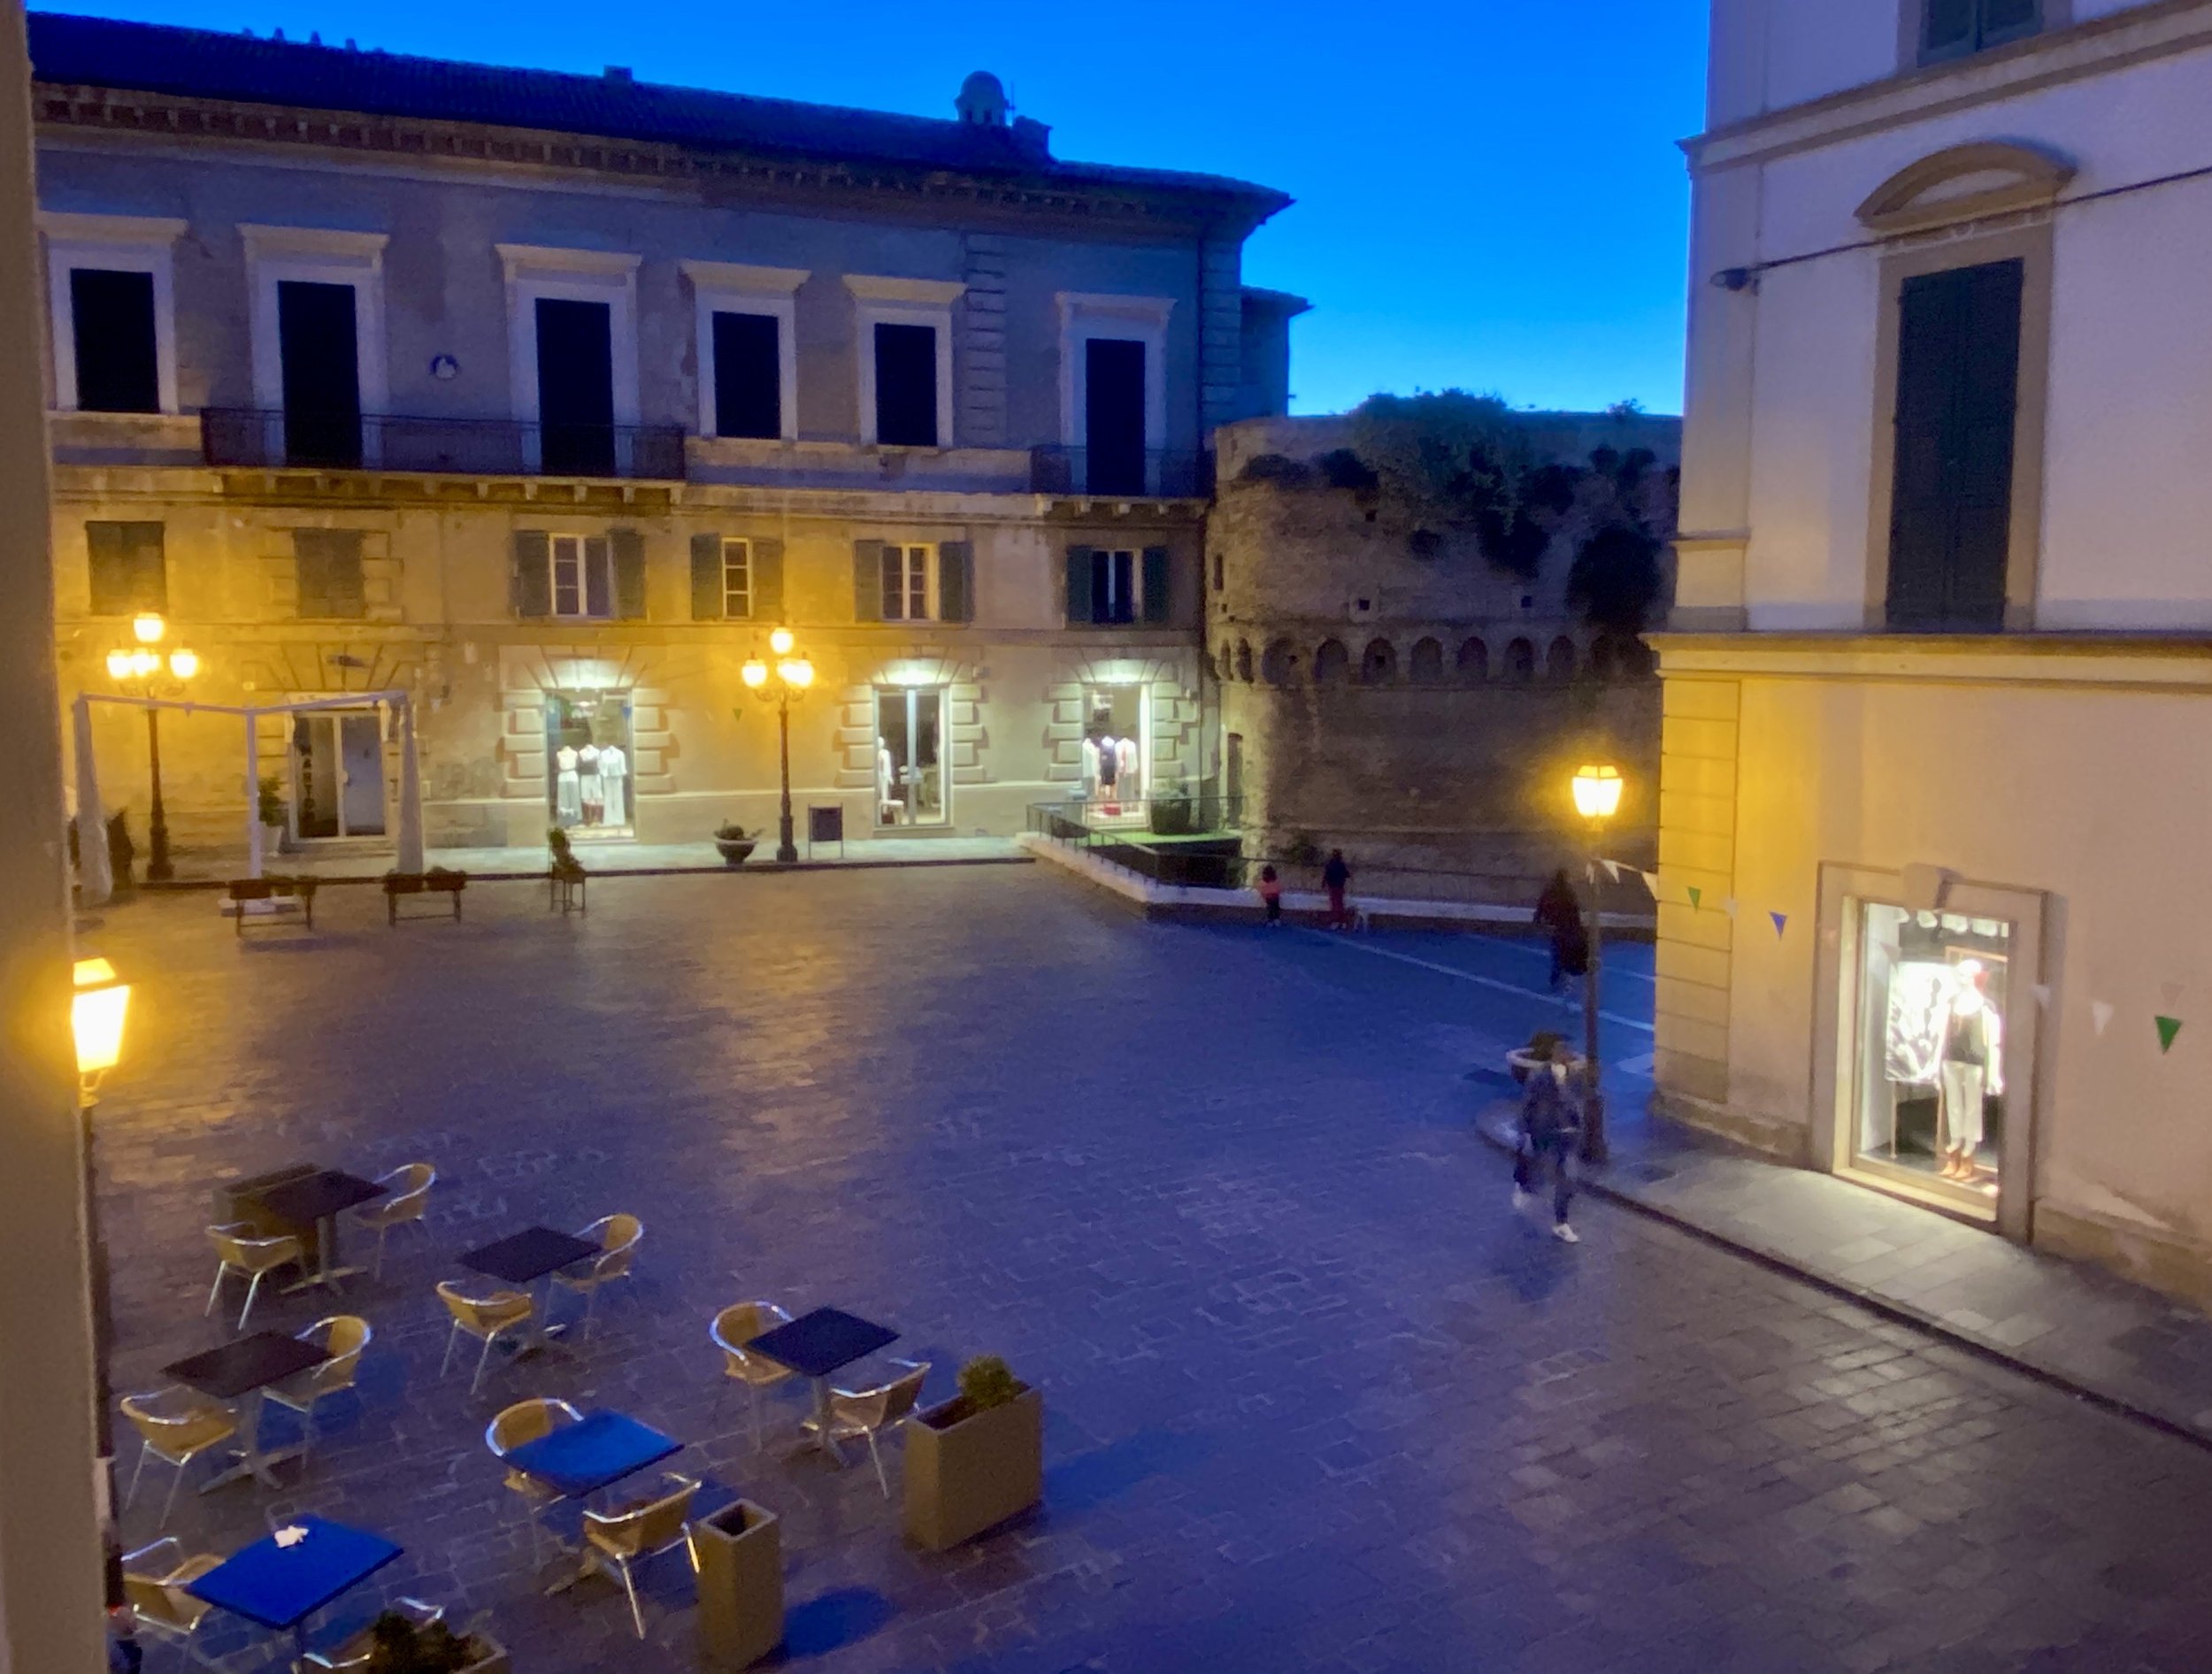 Evening view over Piazza Diomede and Castello Caldoresco